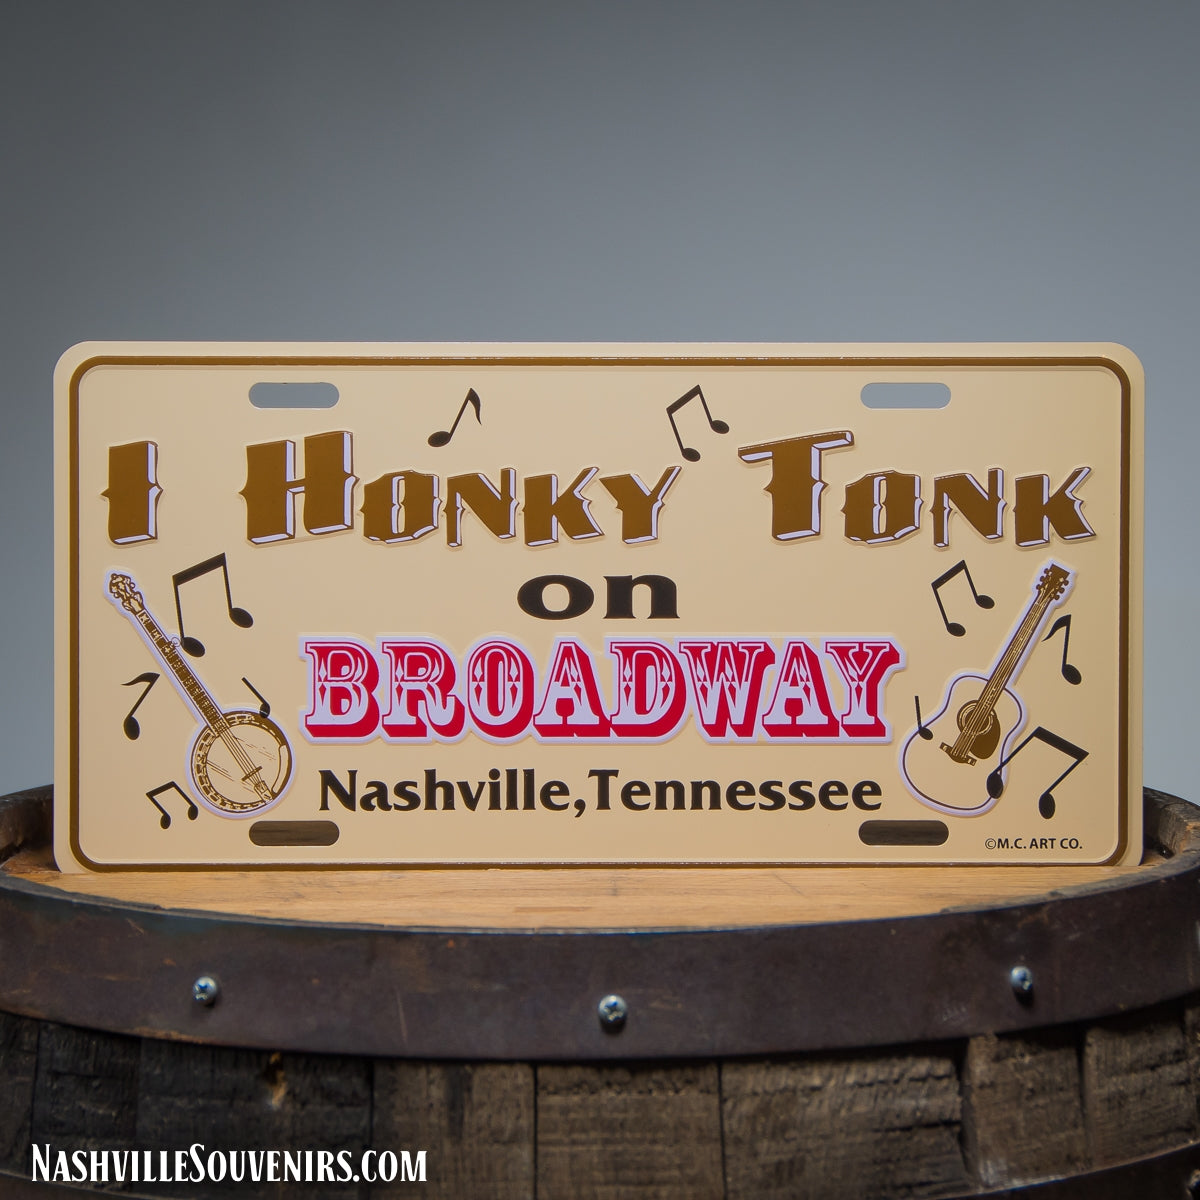 I Honky Tonk on Broadway Nashville, TN License Plate